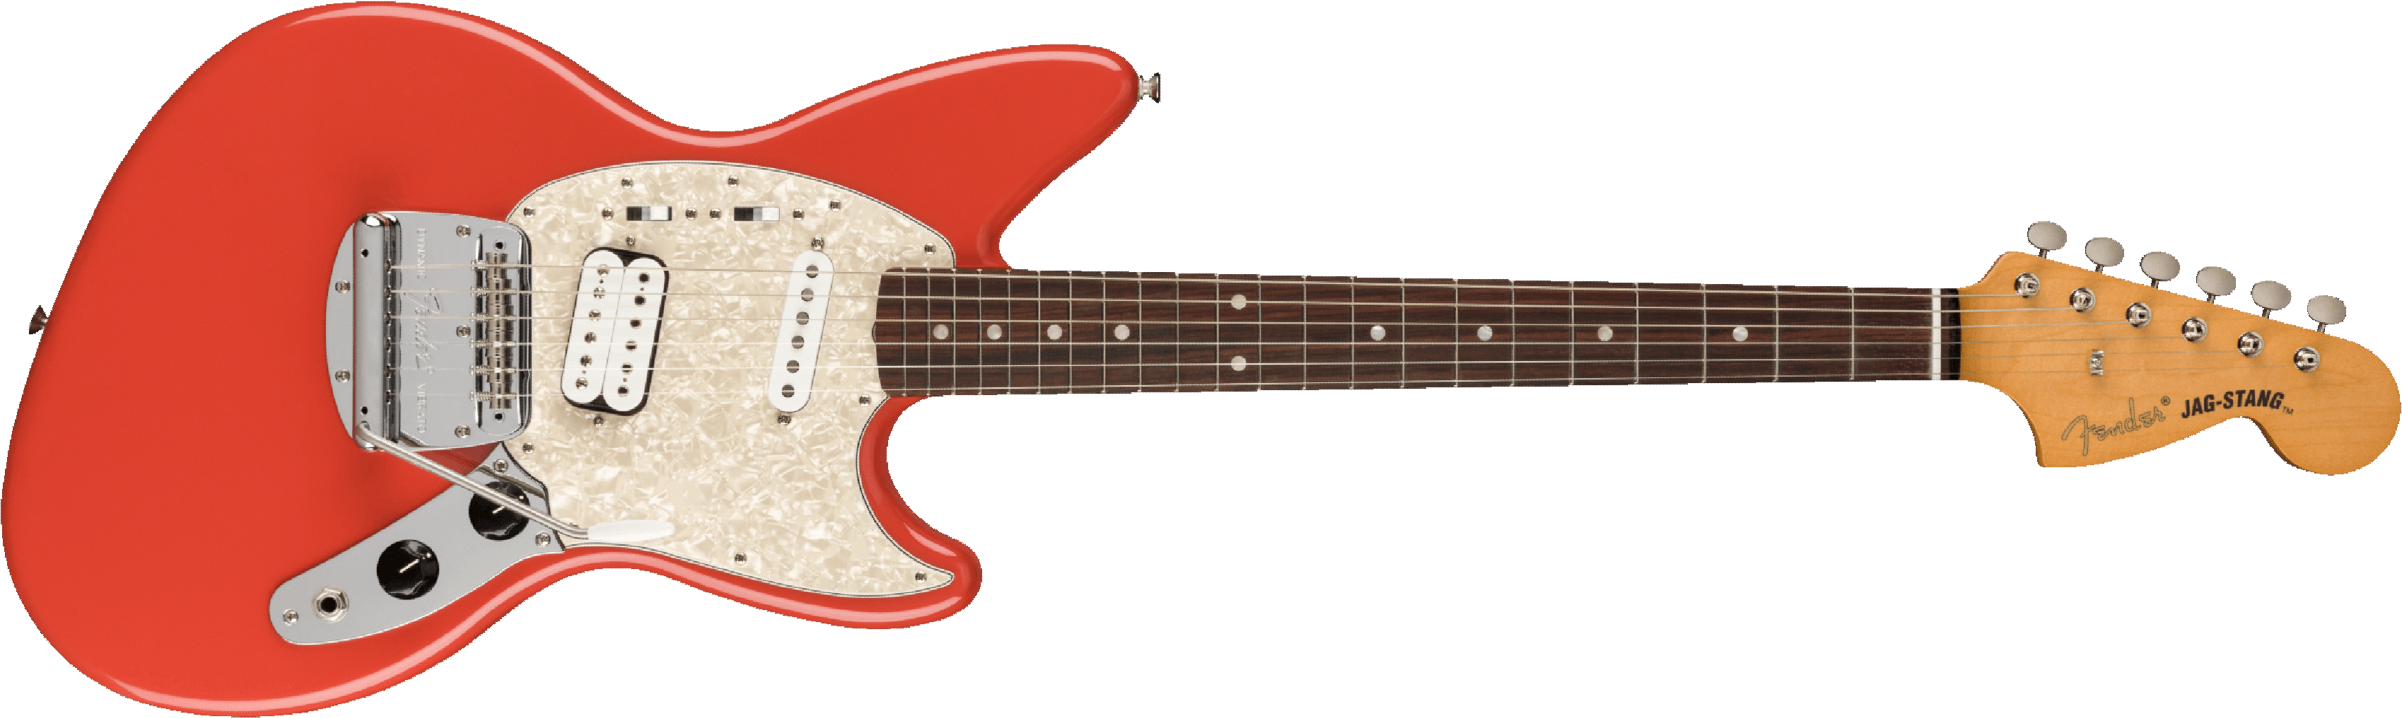 Fender Jag-stang Kurt Cobain Artist Hs Trem Rw - Fiesta Red - Retro-rock elektrische gitaar - Main picture